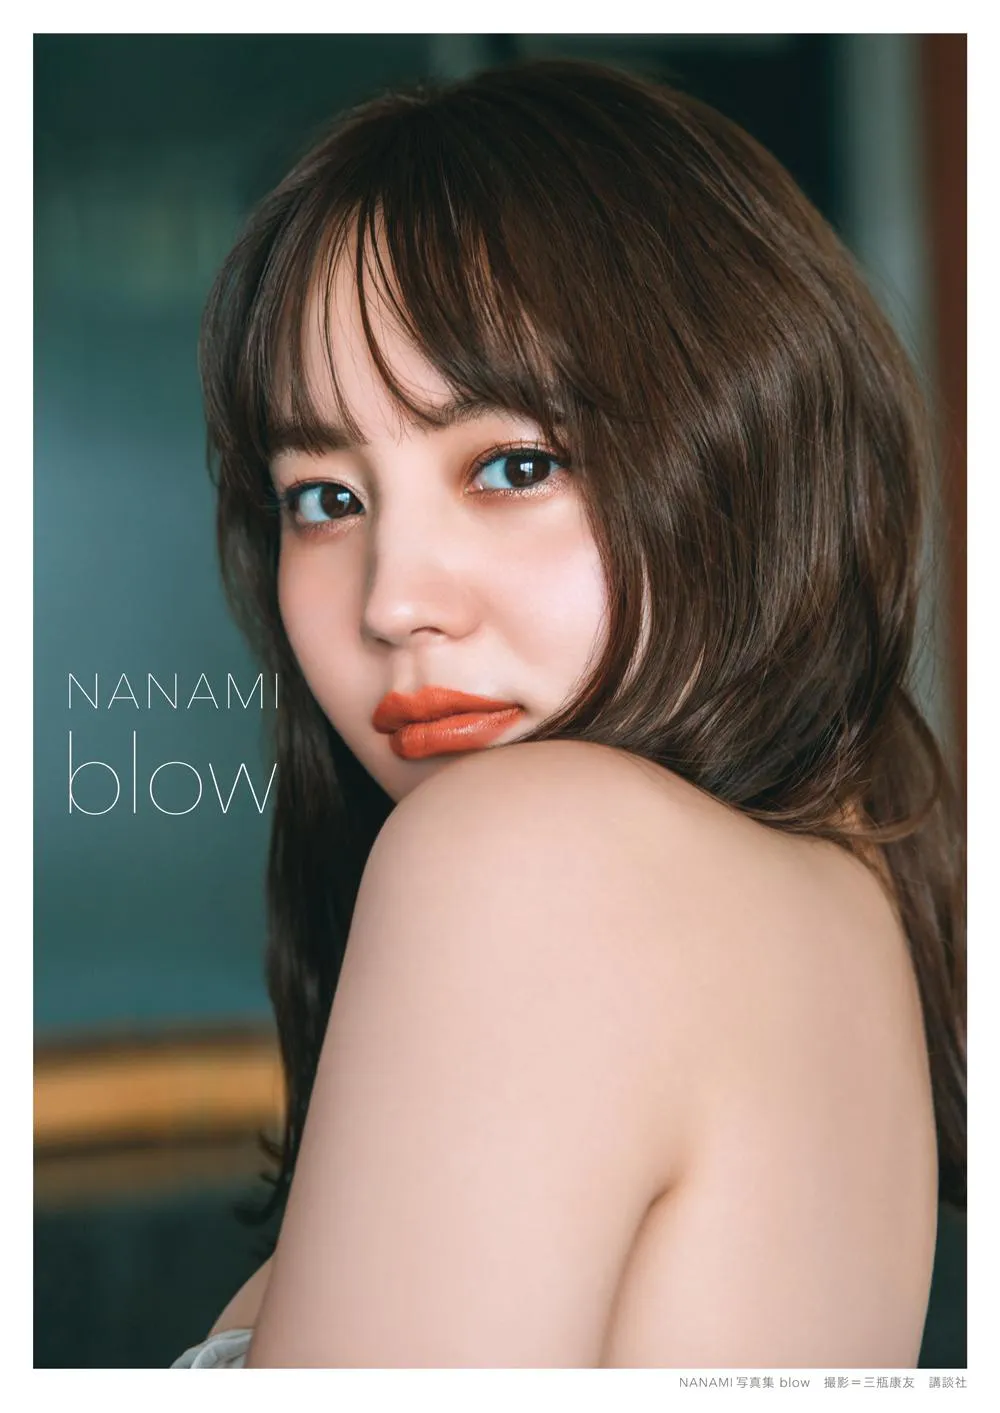 「NANAMI写真集 blow」の表紙カット